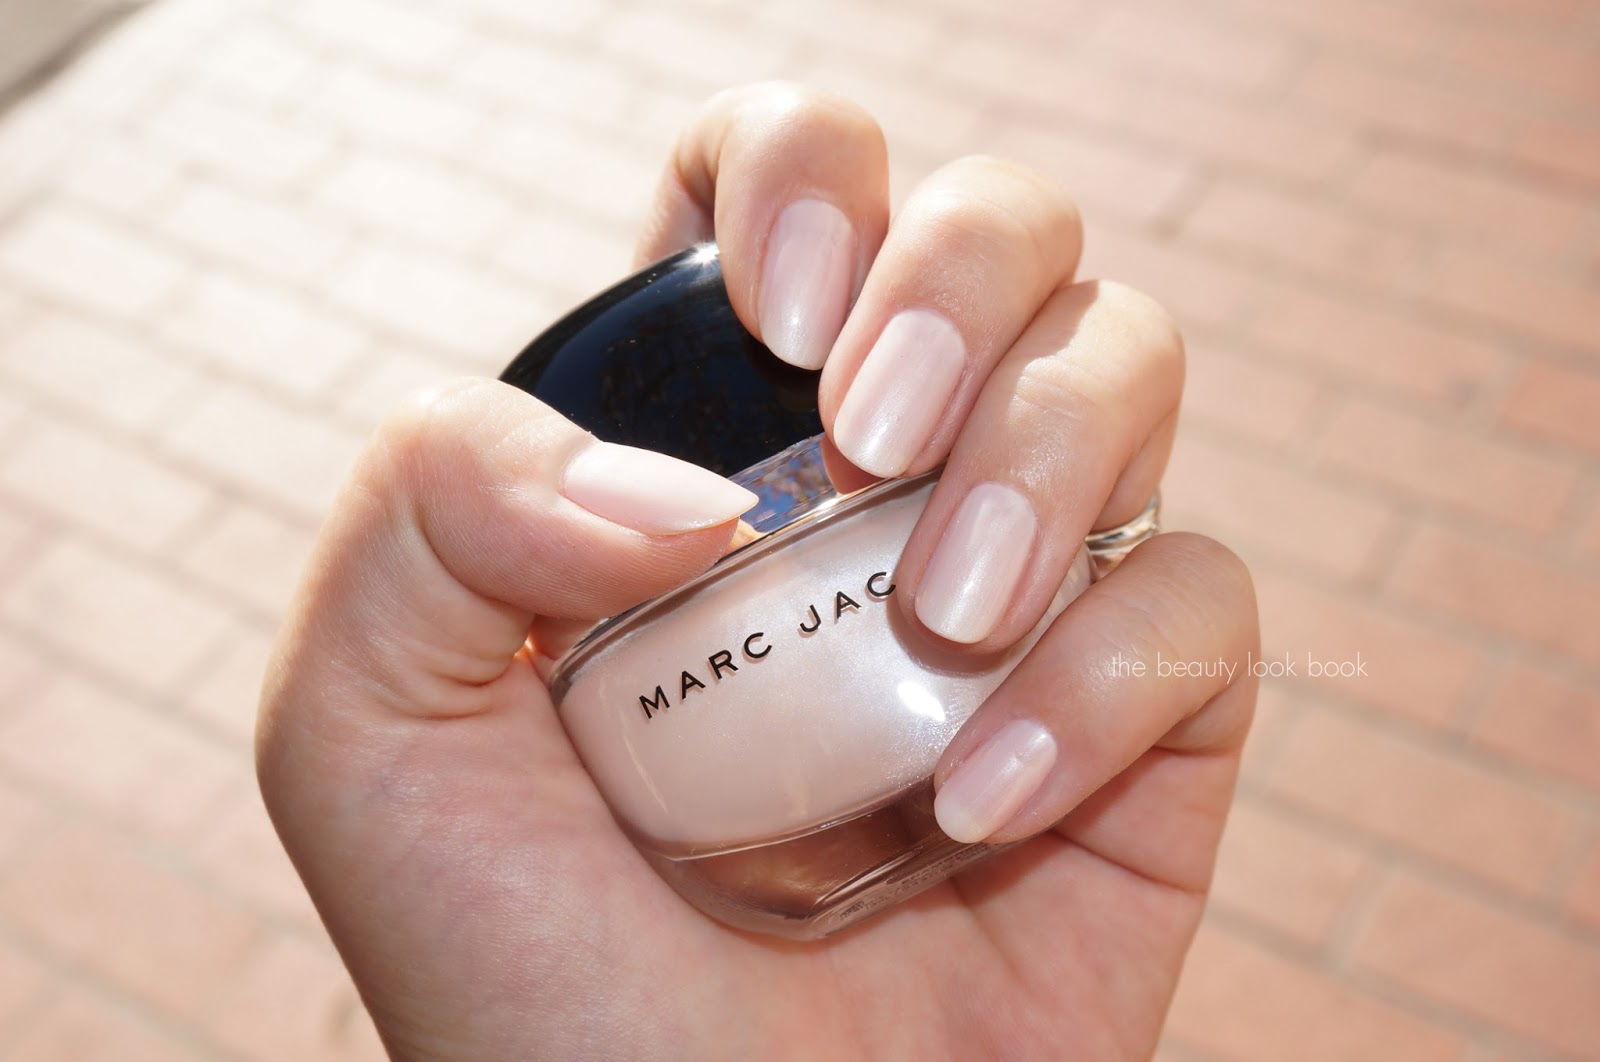 2. Marc Jacobs Beauty Enamored Hi-Shine Nail Polish in "Gatsby" - wide 10